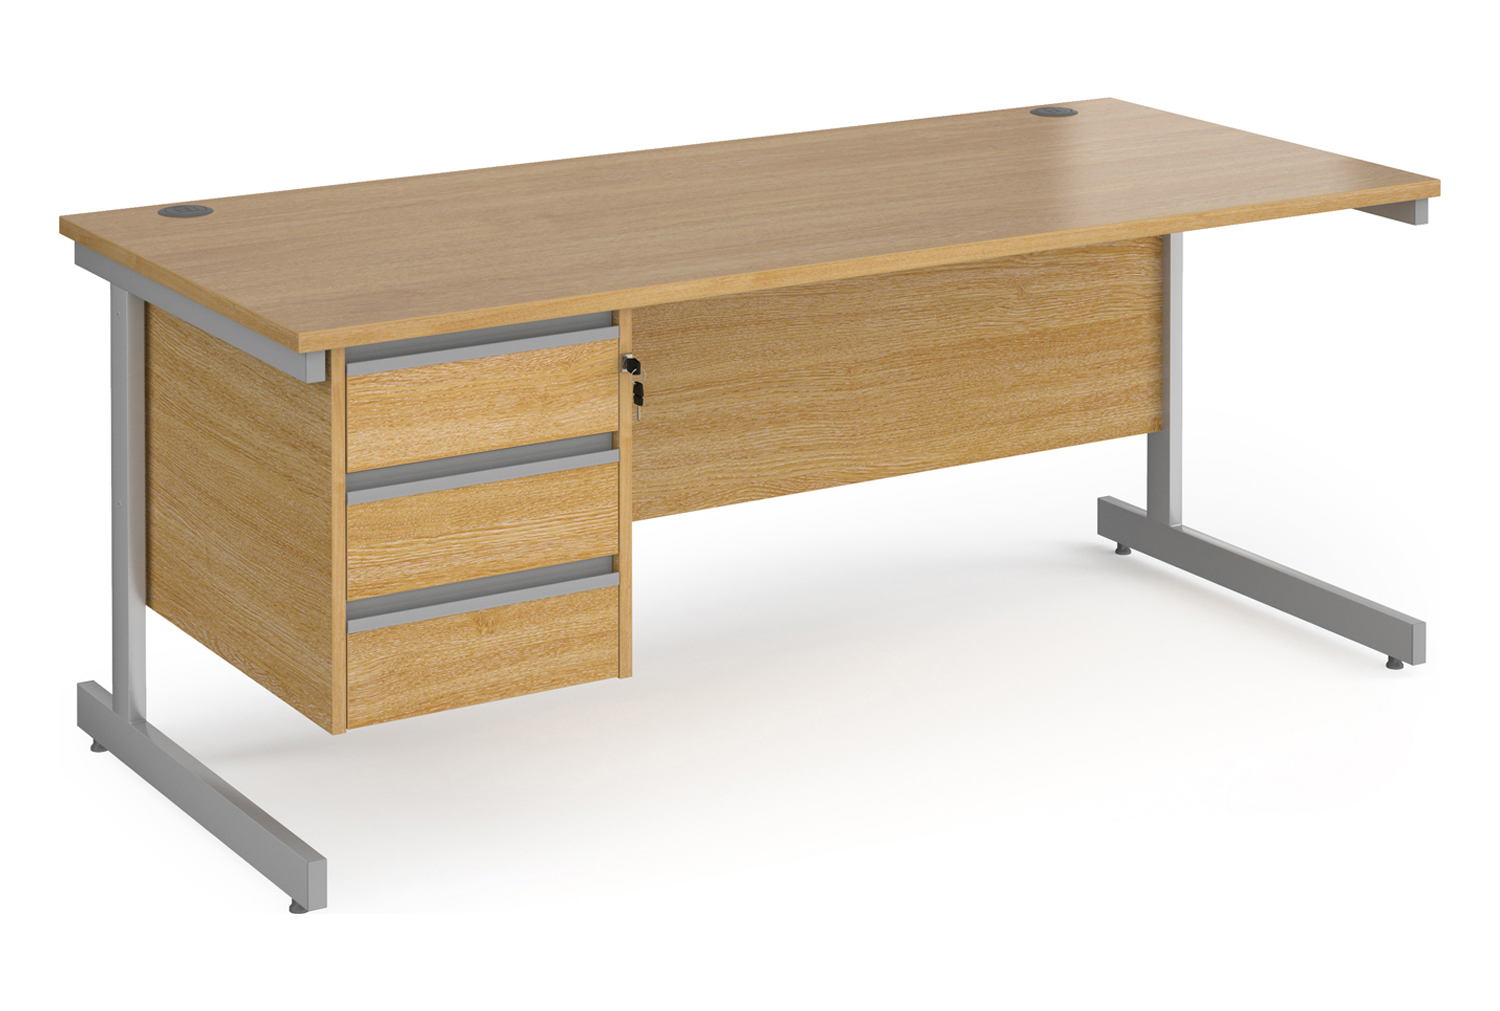 Value Line Classic+ Rectangular C-Leg Office Desk 3 Drawers (Silver Leg), 180wx80dx73h (cm), Oak, Express Delivery